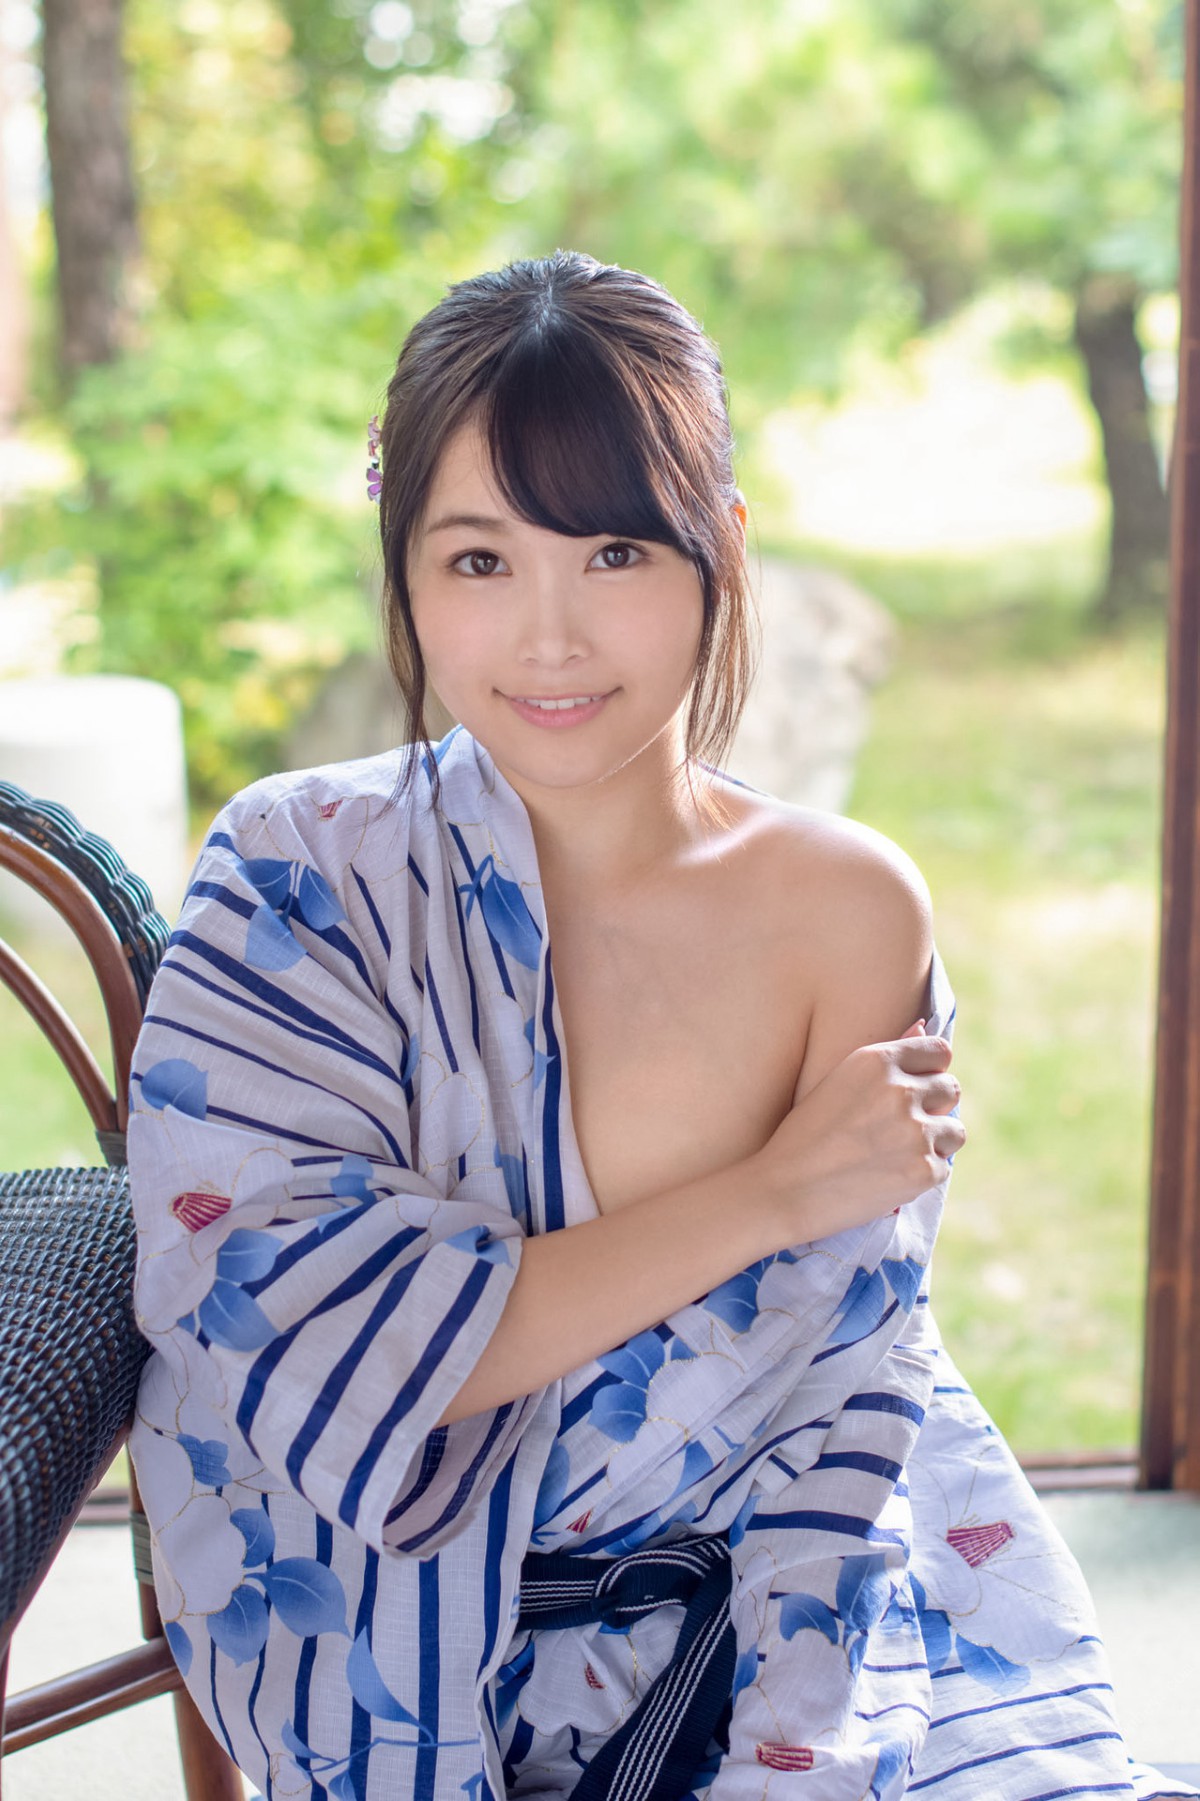 Photobook 2019 07 19 Asuna Kawai Maria Aine Nozomi Arimura 2 Days 1 Night Hot Spring Date 0010 2575012590.jpg